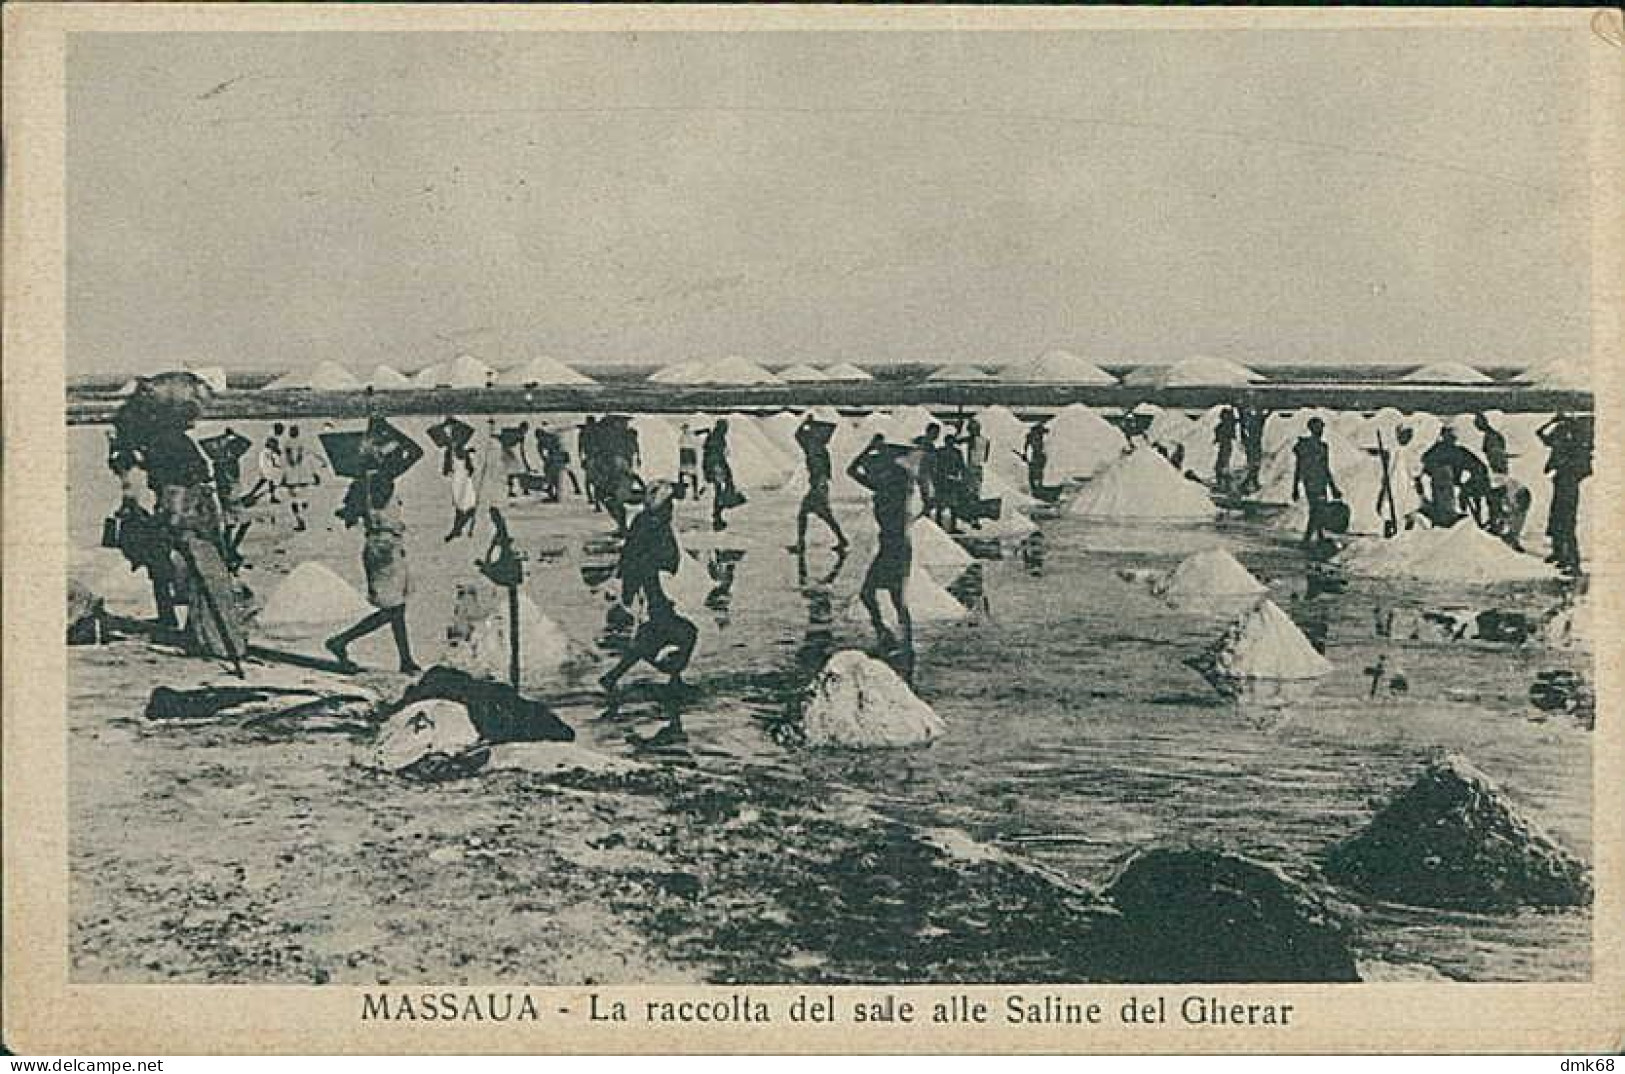 ERITREA - ASMARA - QUARTIERE INDIGENO - MAILED 1936 / STAMPS (12504) - Erythrée